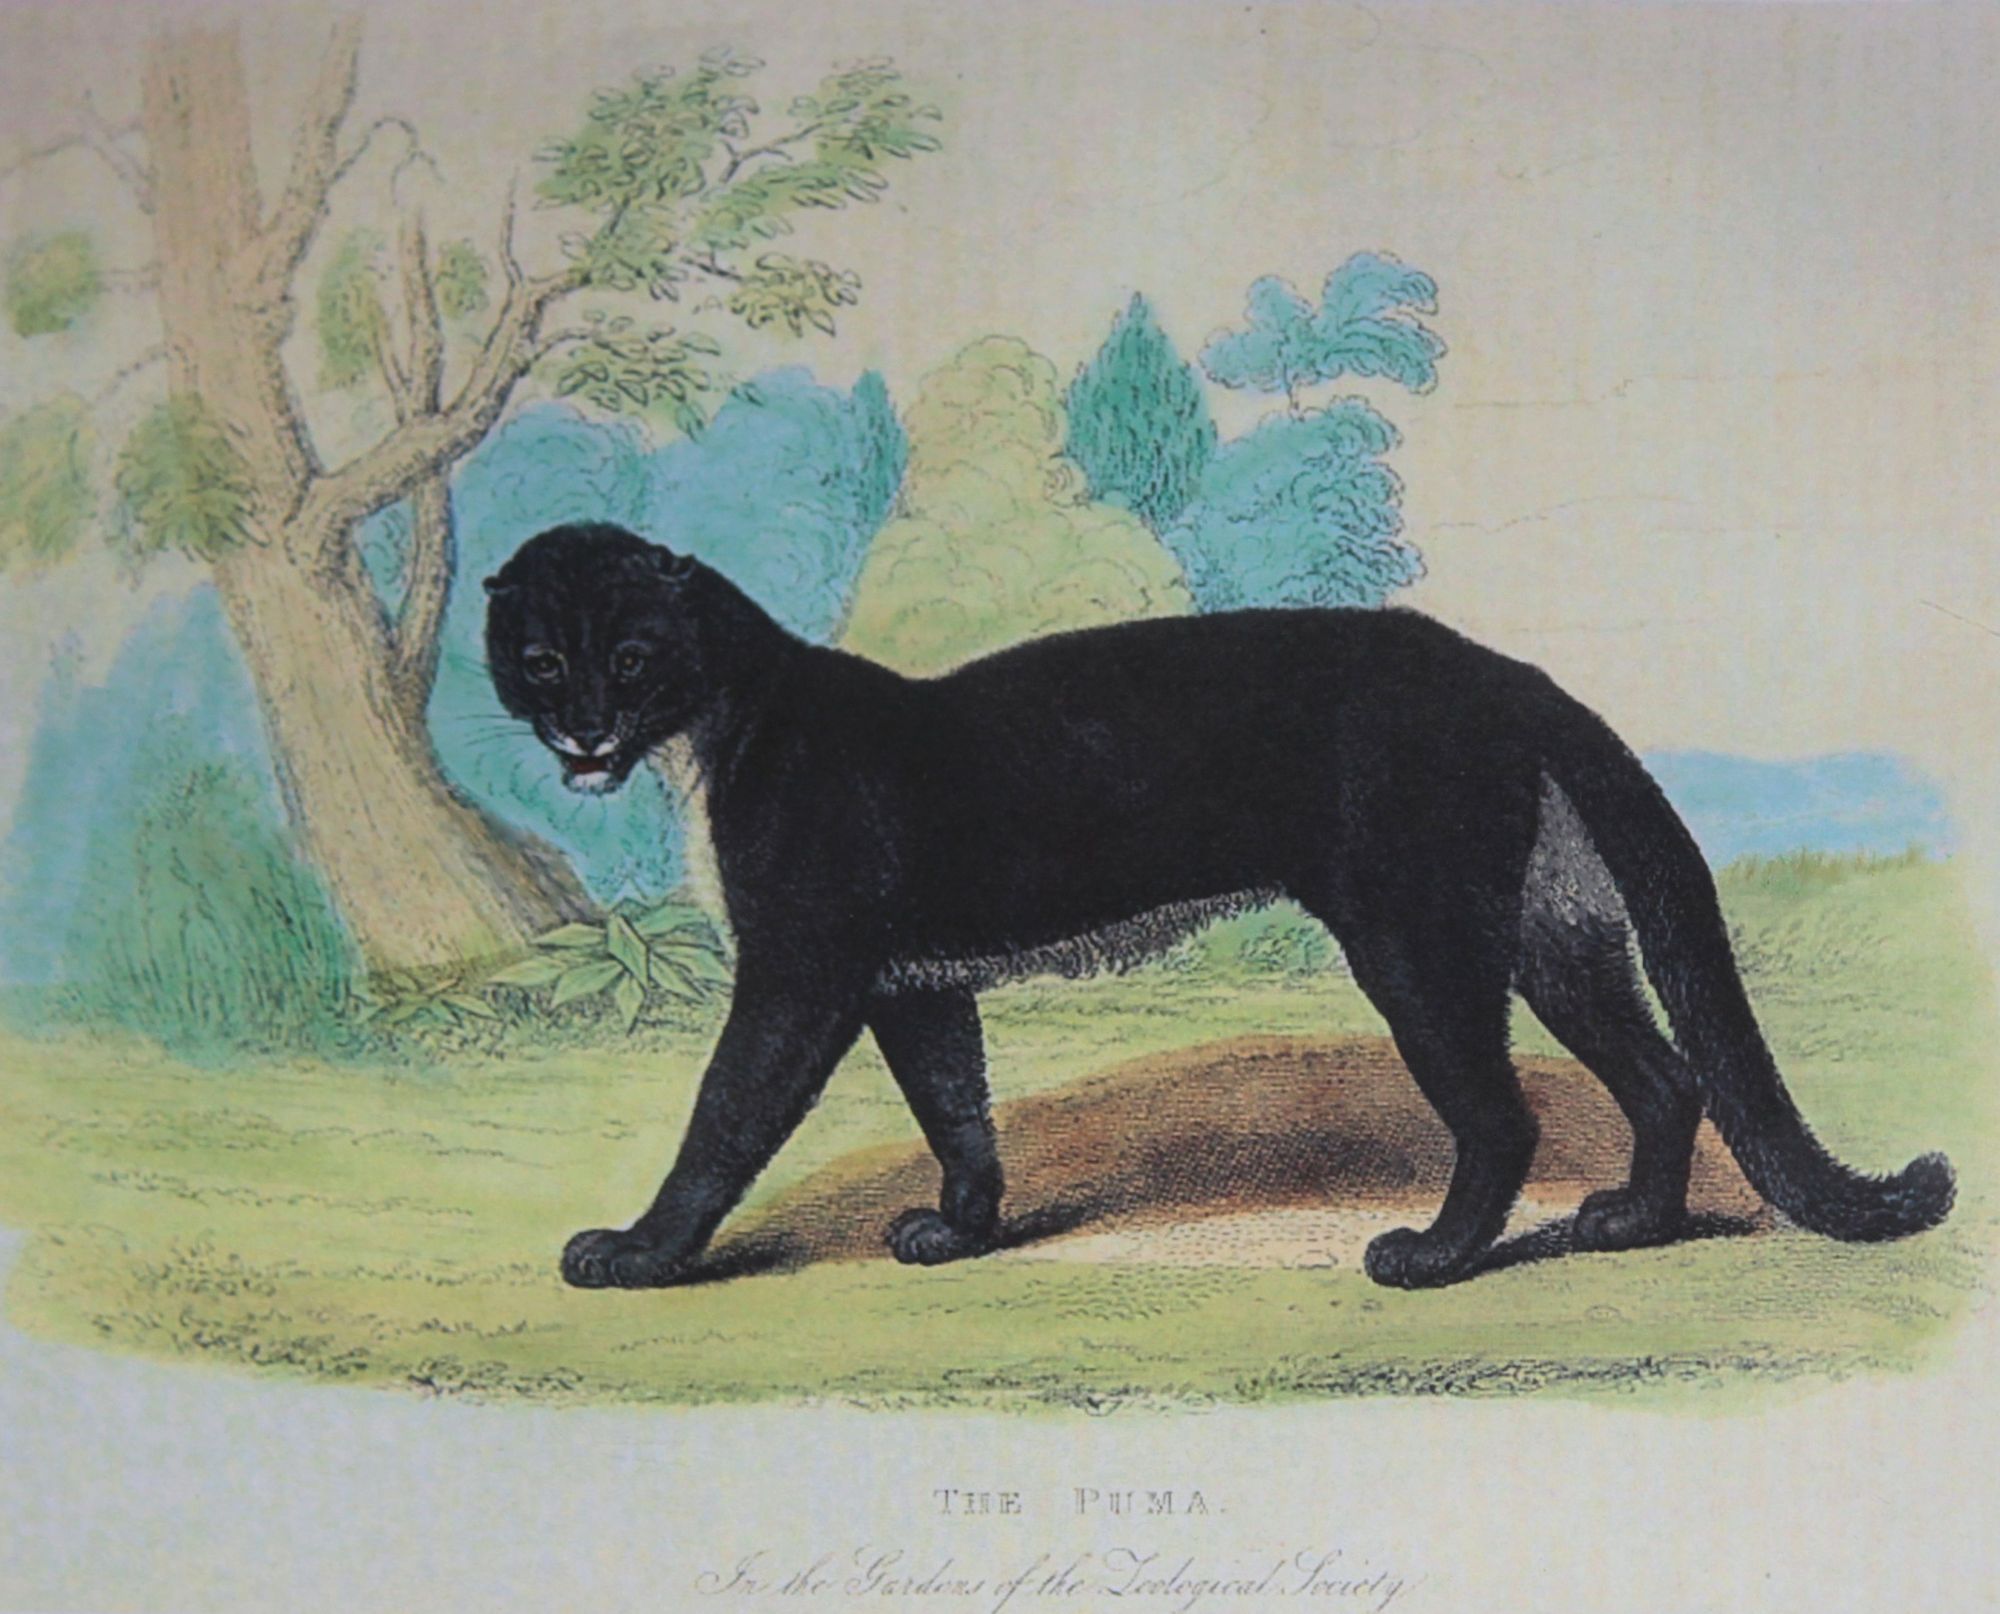 a black puma